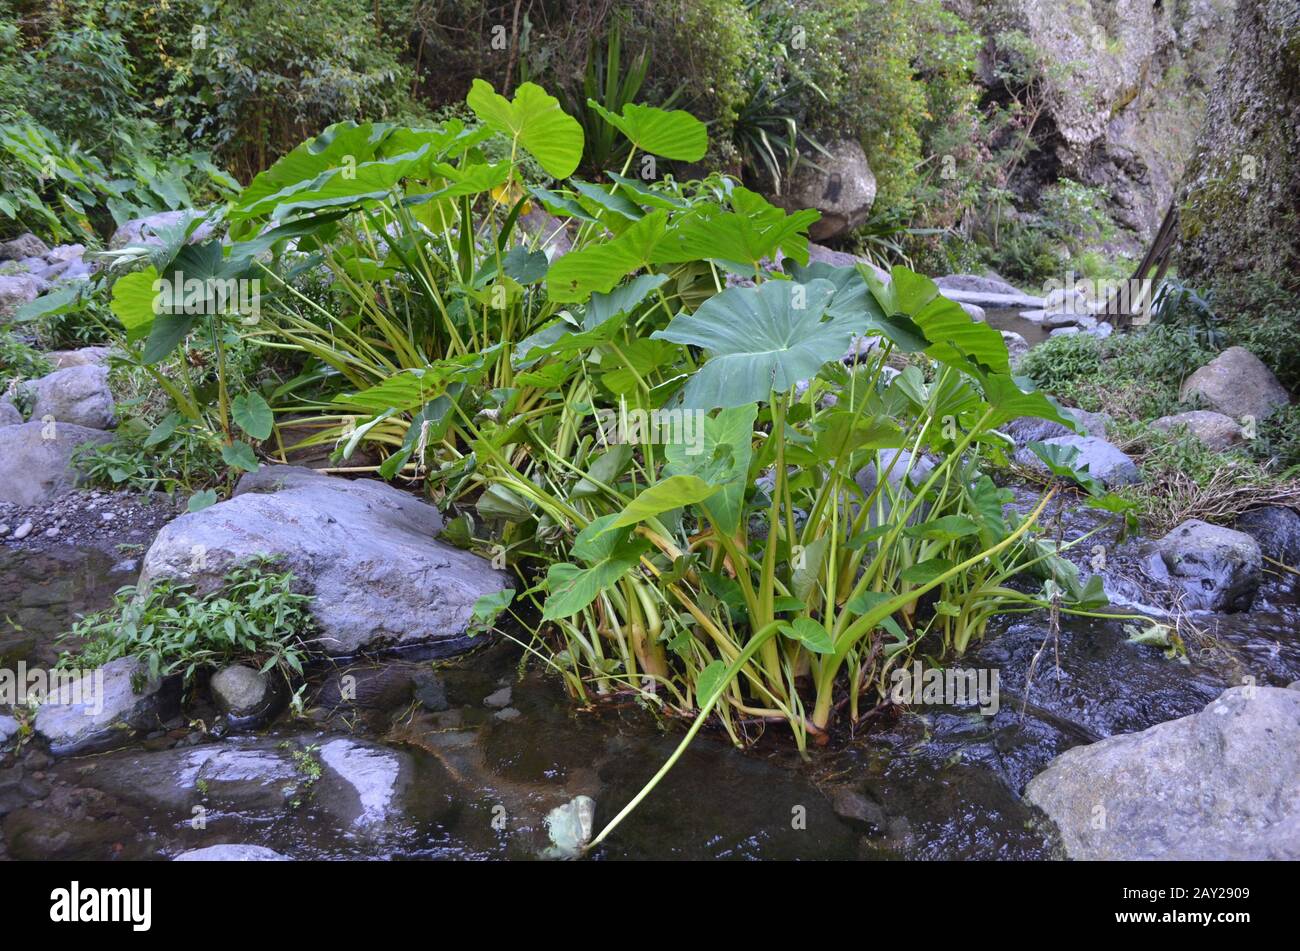 A wild yam shrub growing by a mountain stream in Mafate caldera (Cirque de Mafate), Réunion island, Indian Ocean Stock Photo